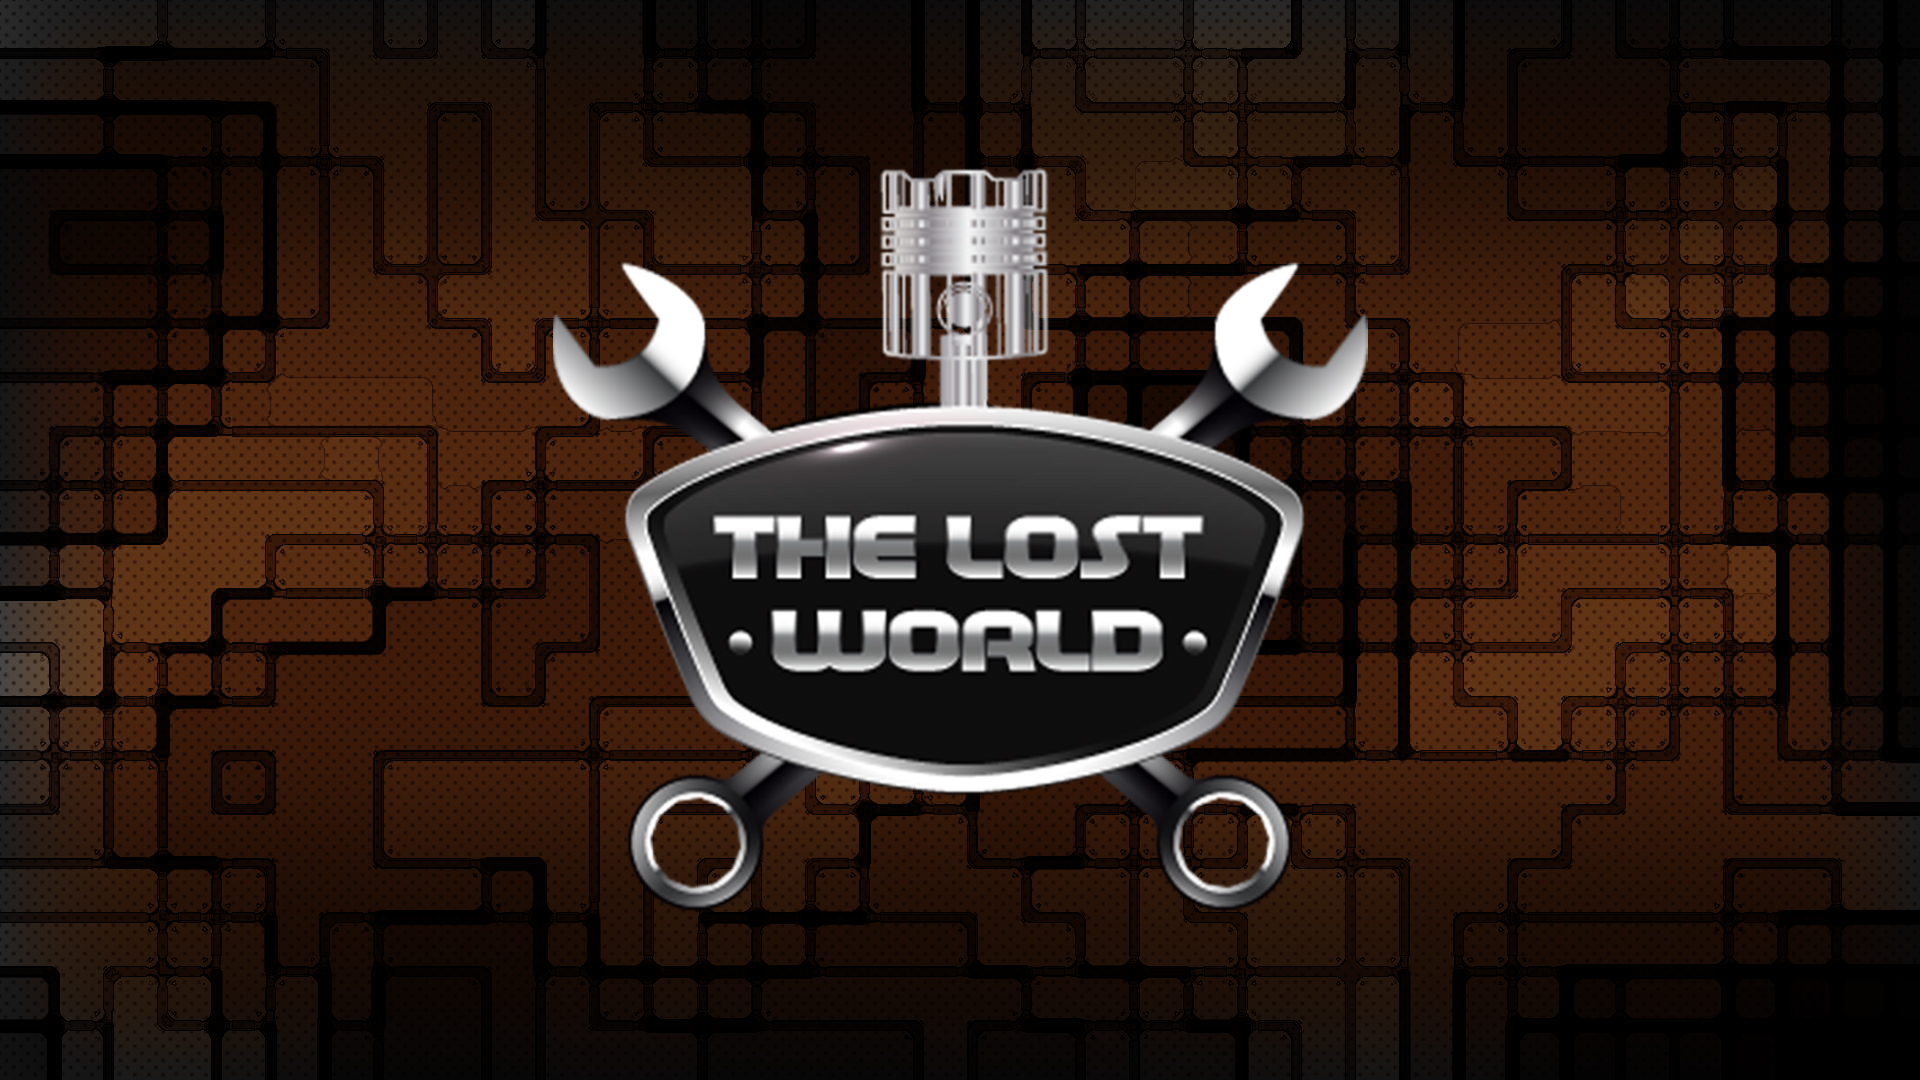 TheLostWorld Logo with background